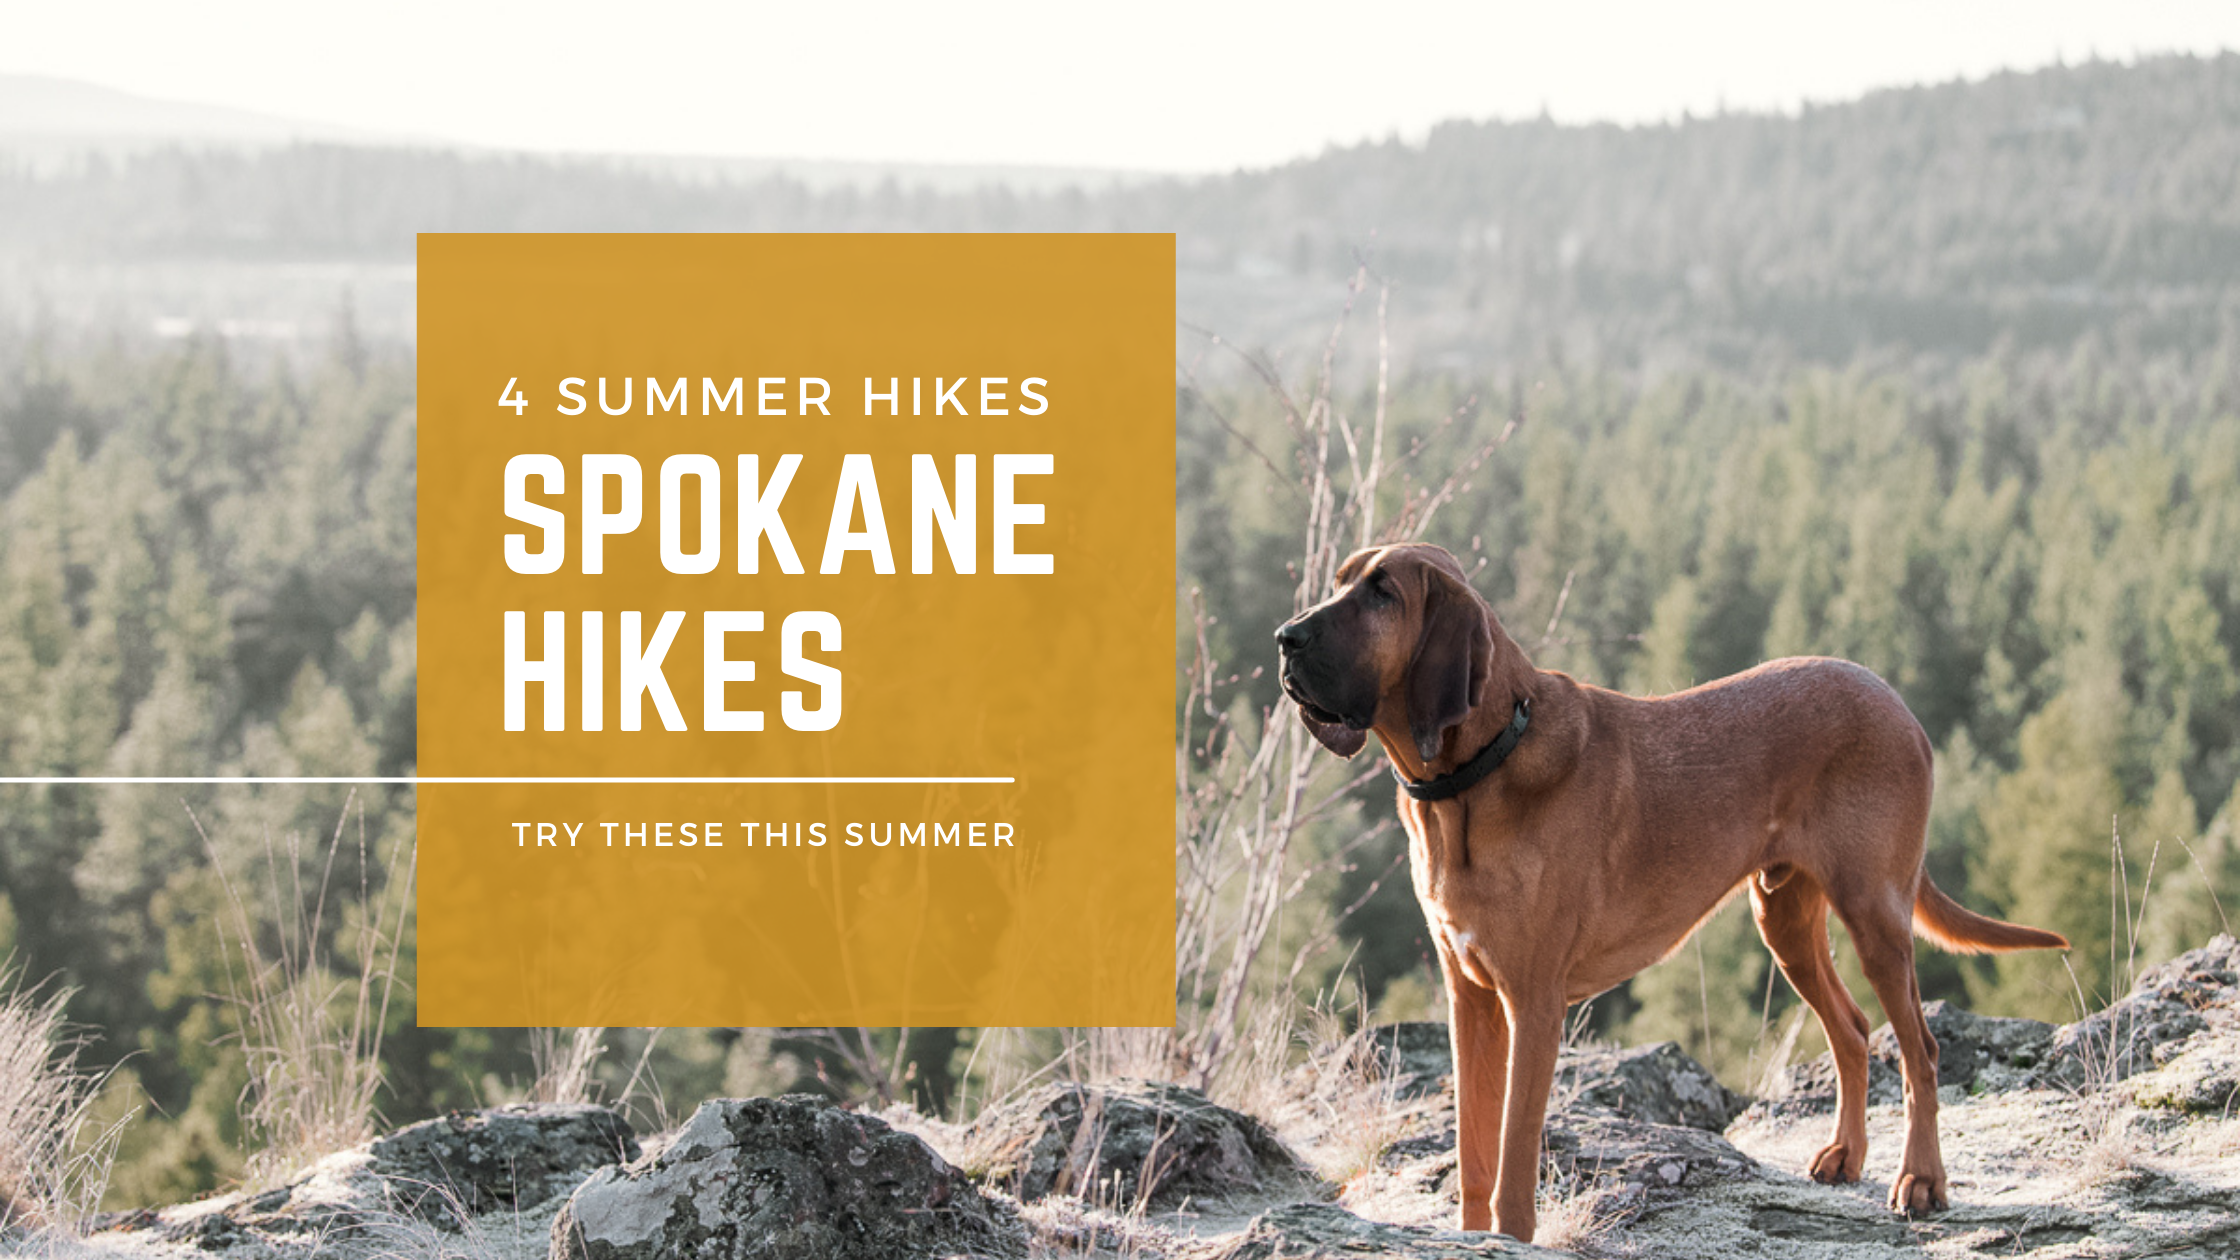 Spokane hikes